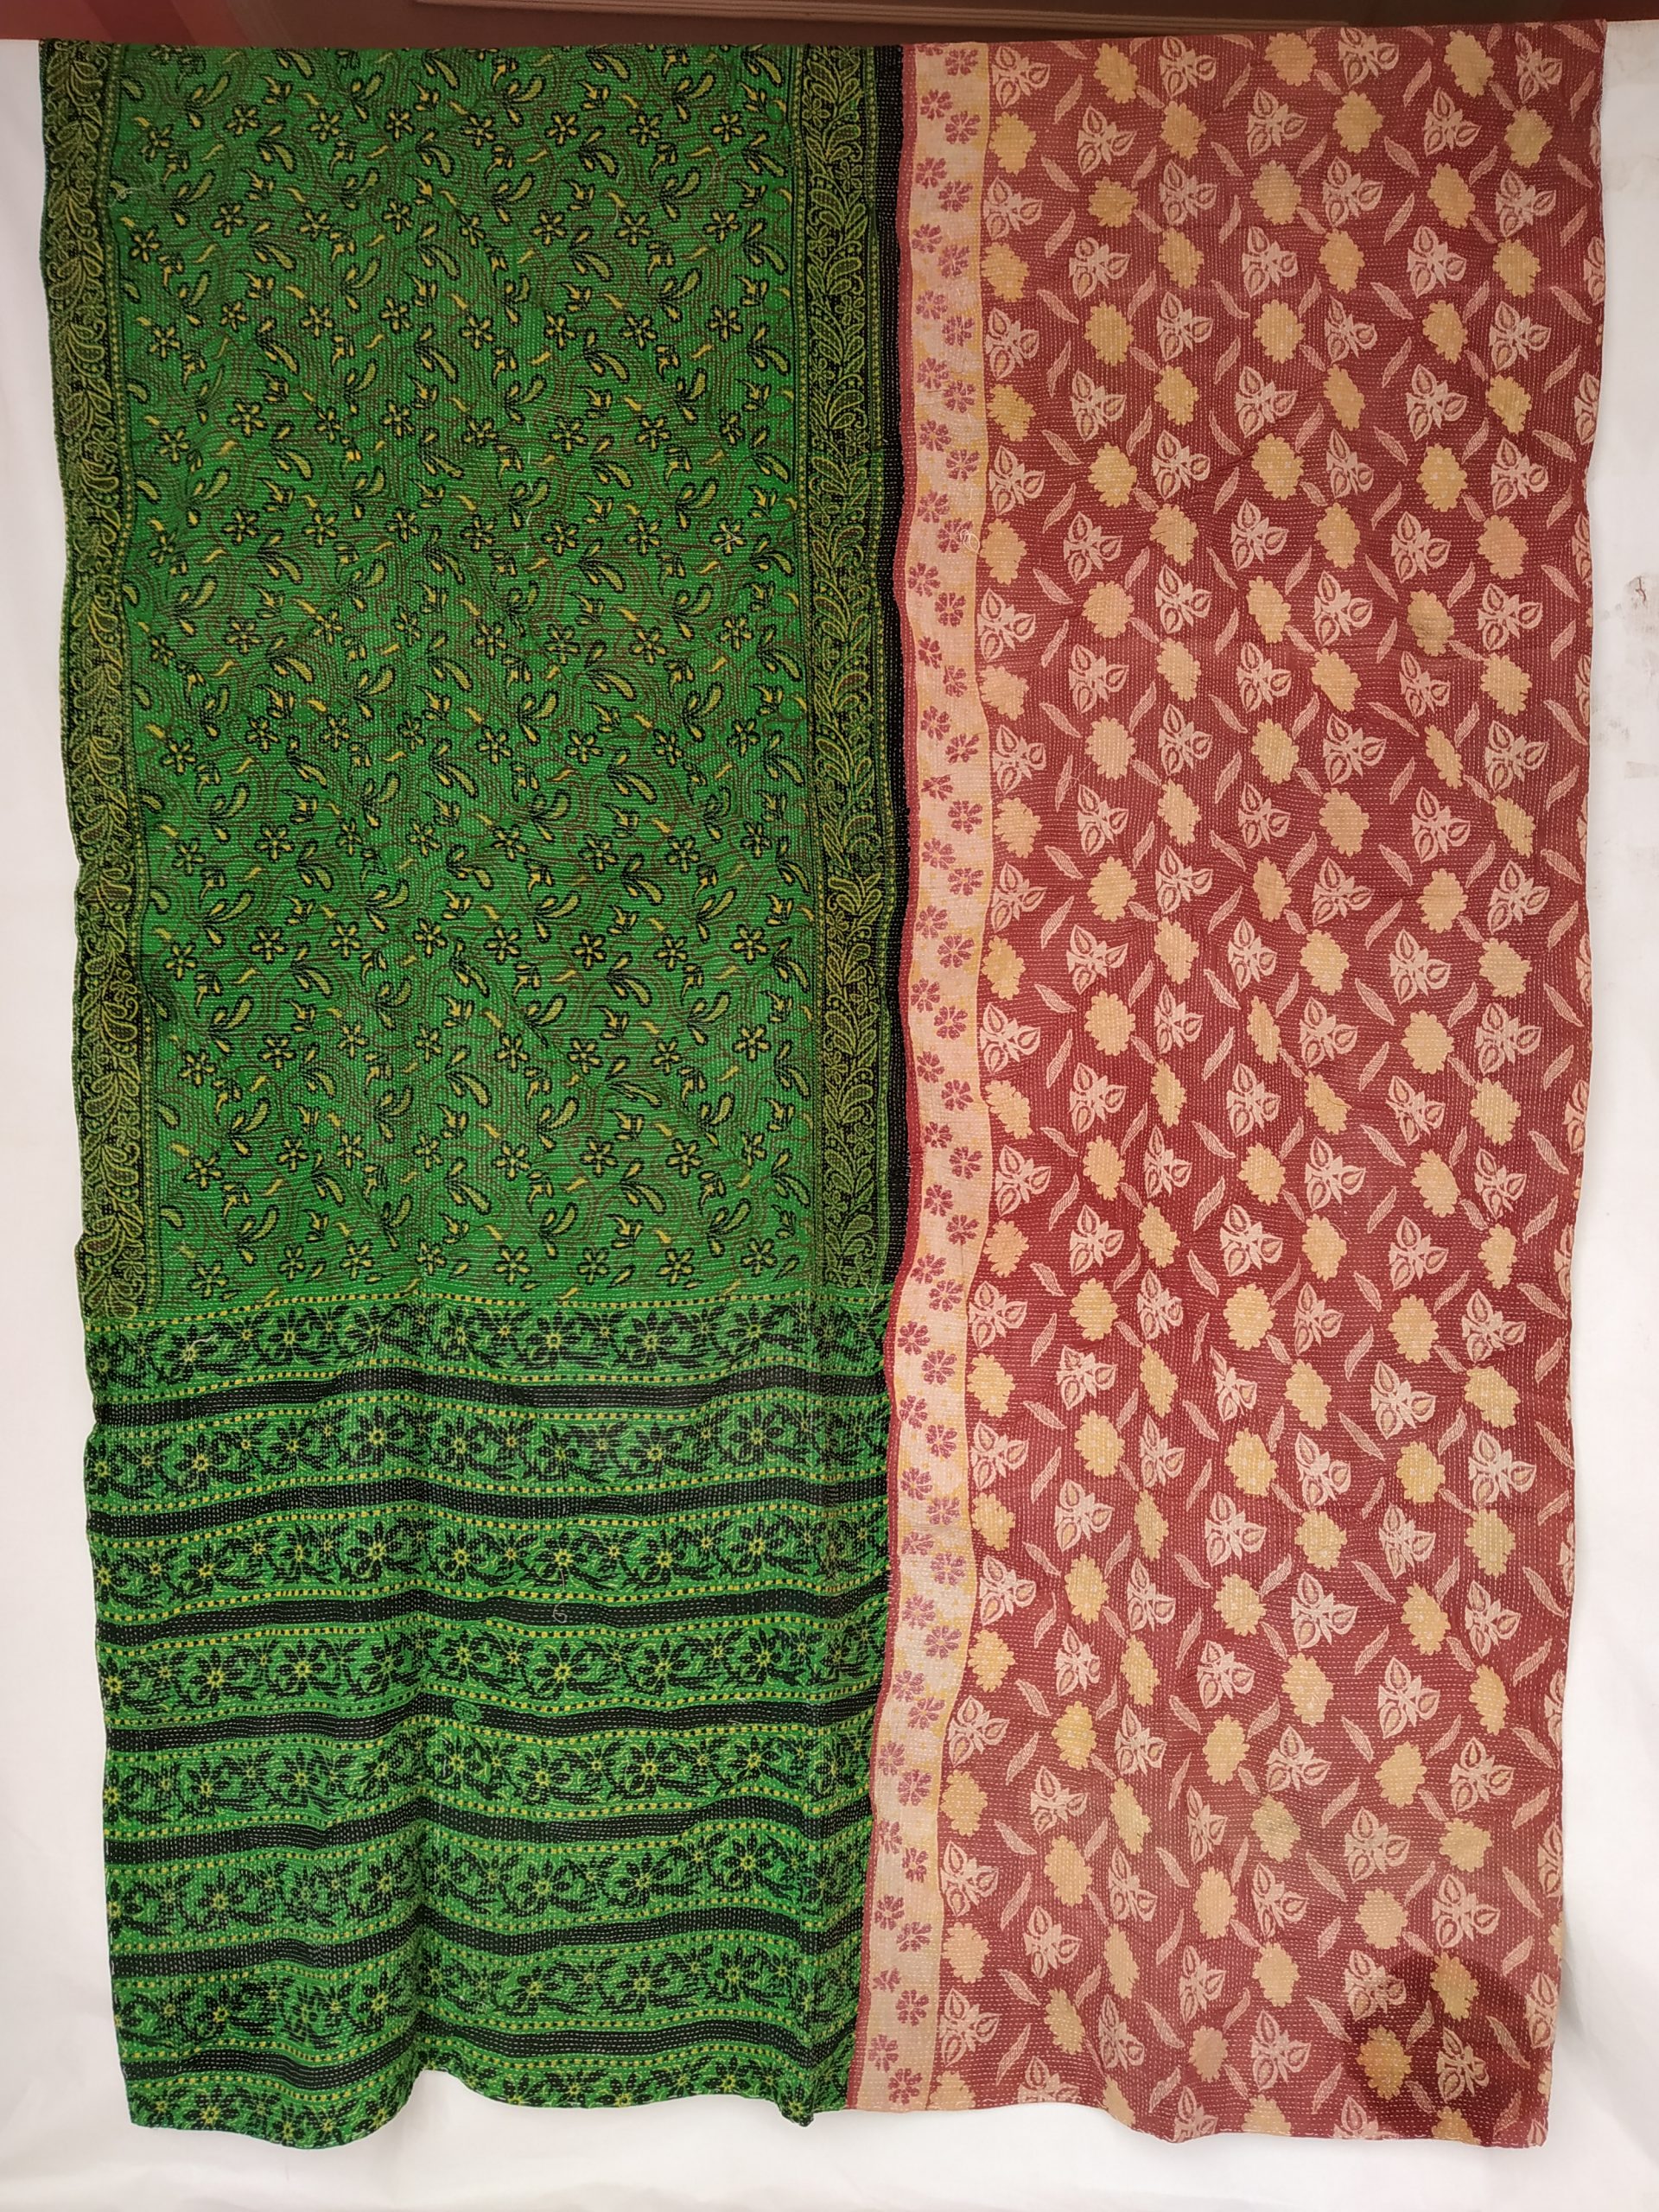 Vintage Kantha Sari Throw Quilt - Vintage Kantha Quilts, Throw Blankets ...